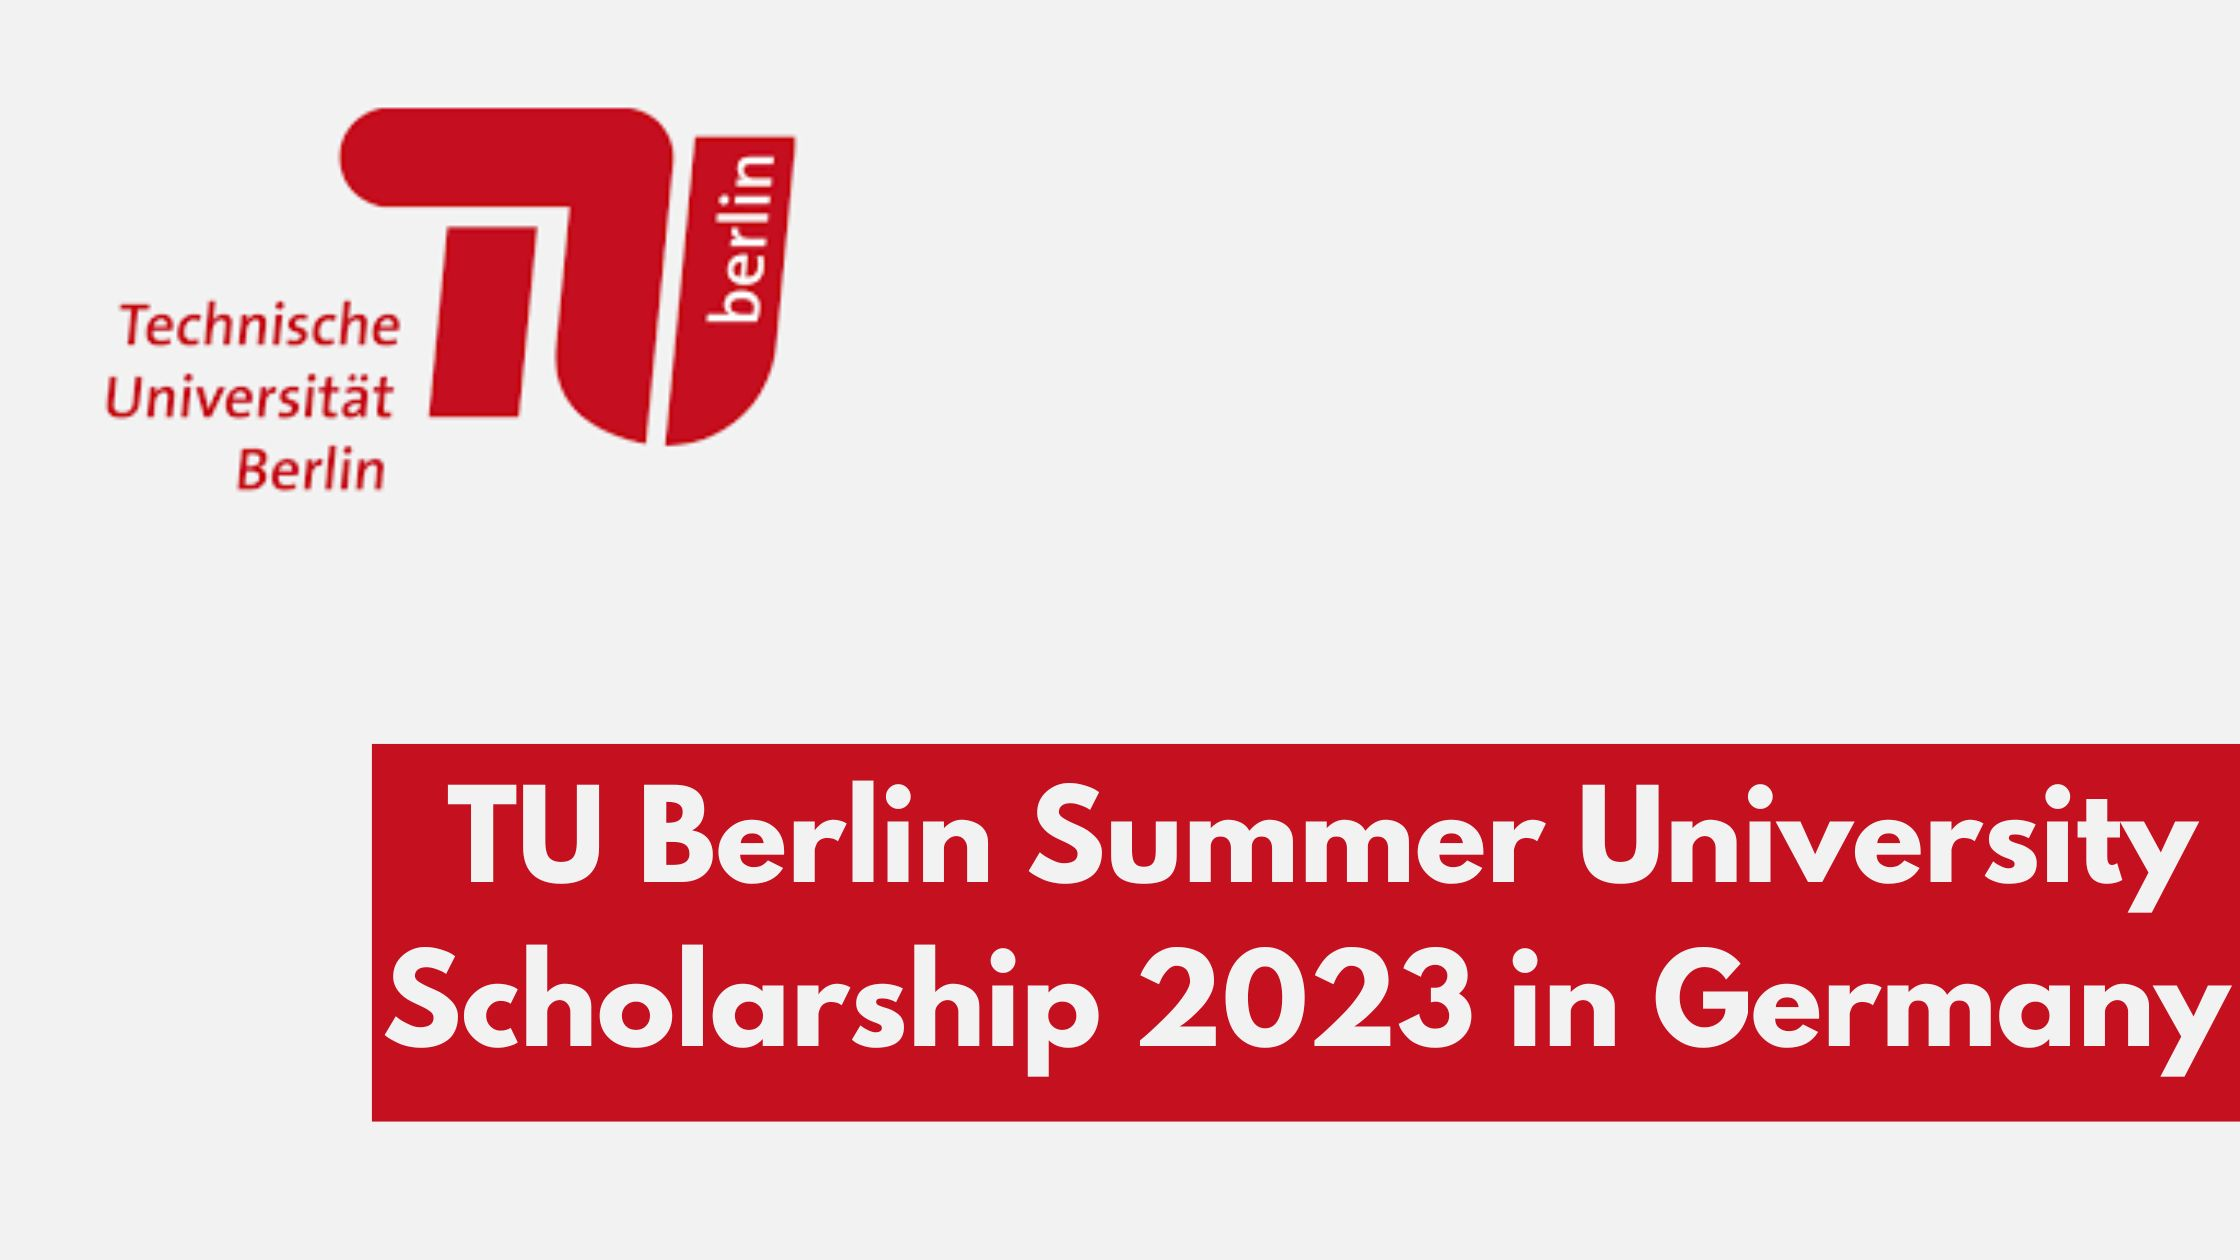 TU Berlin Summer University Scholarship 2023 in Germany